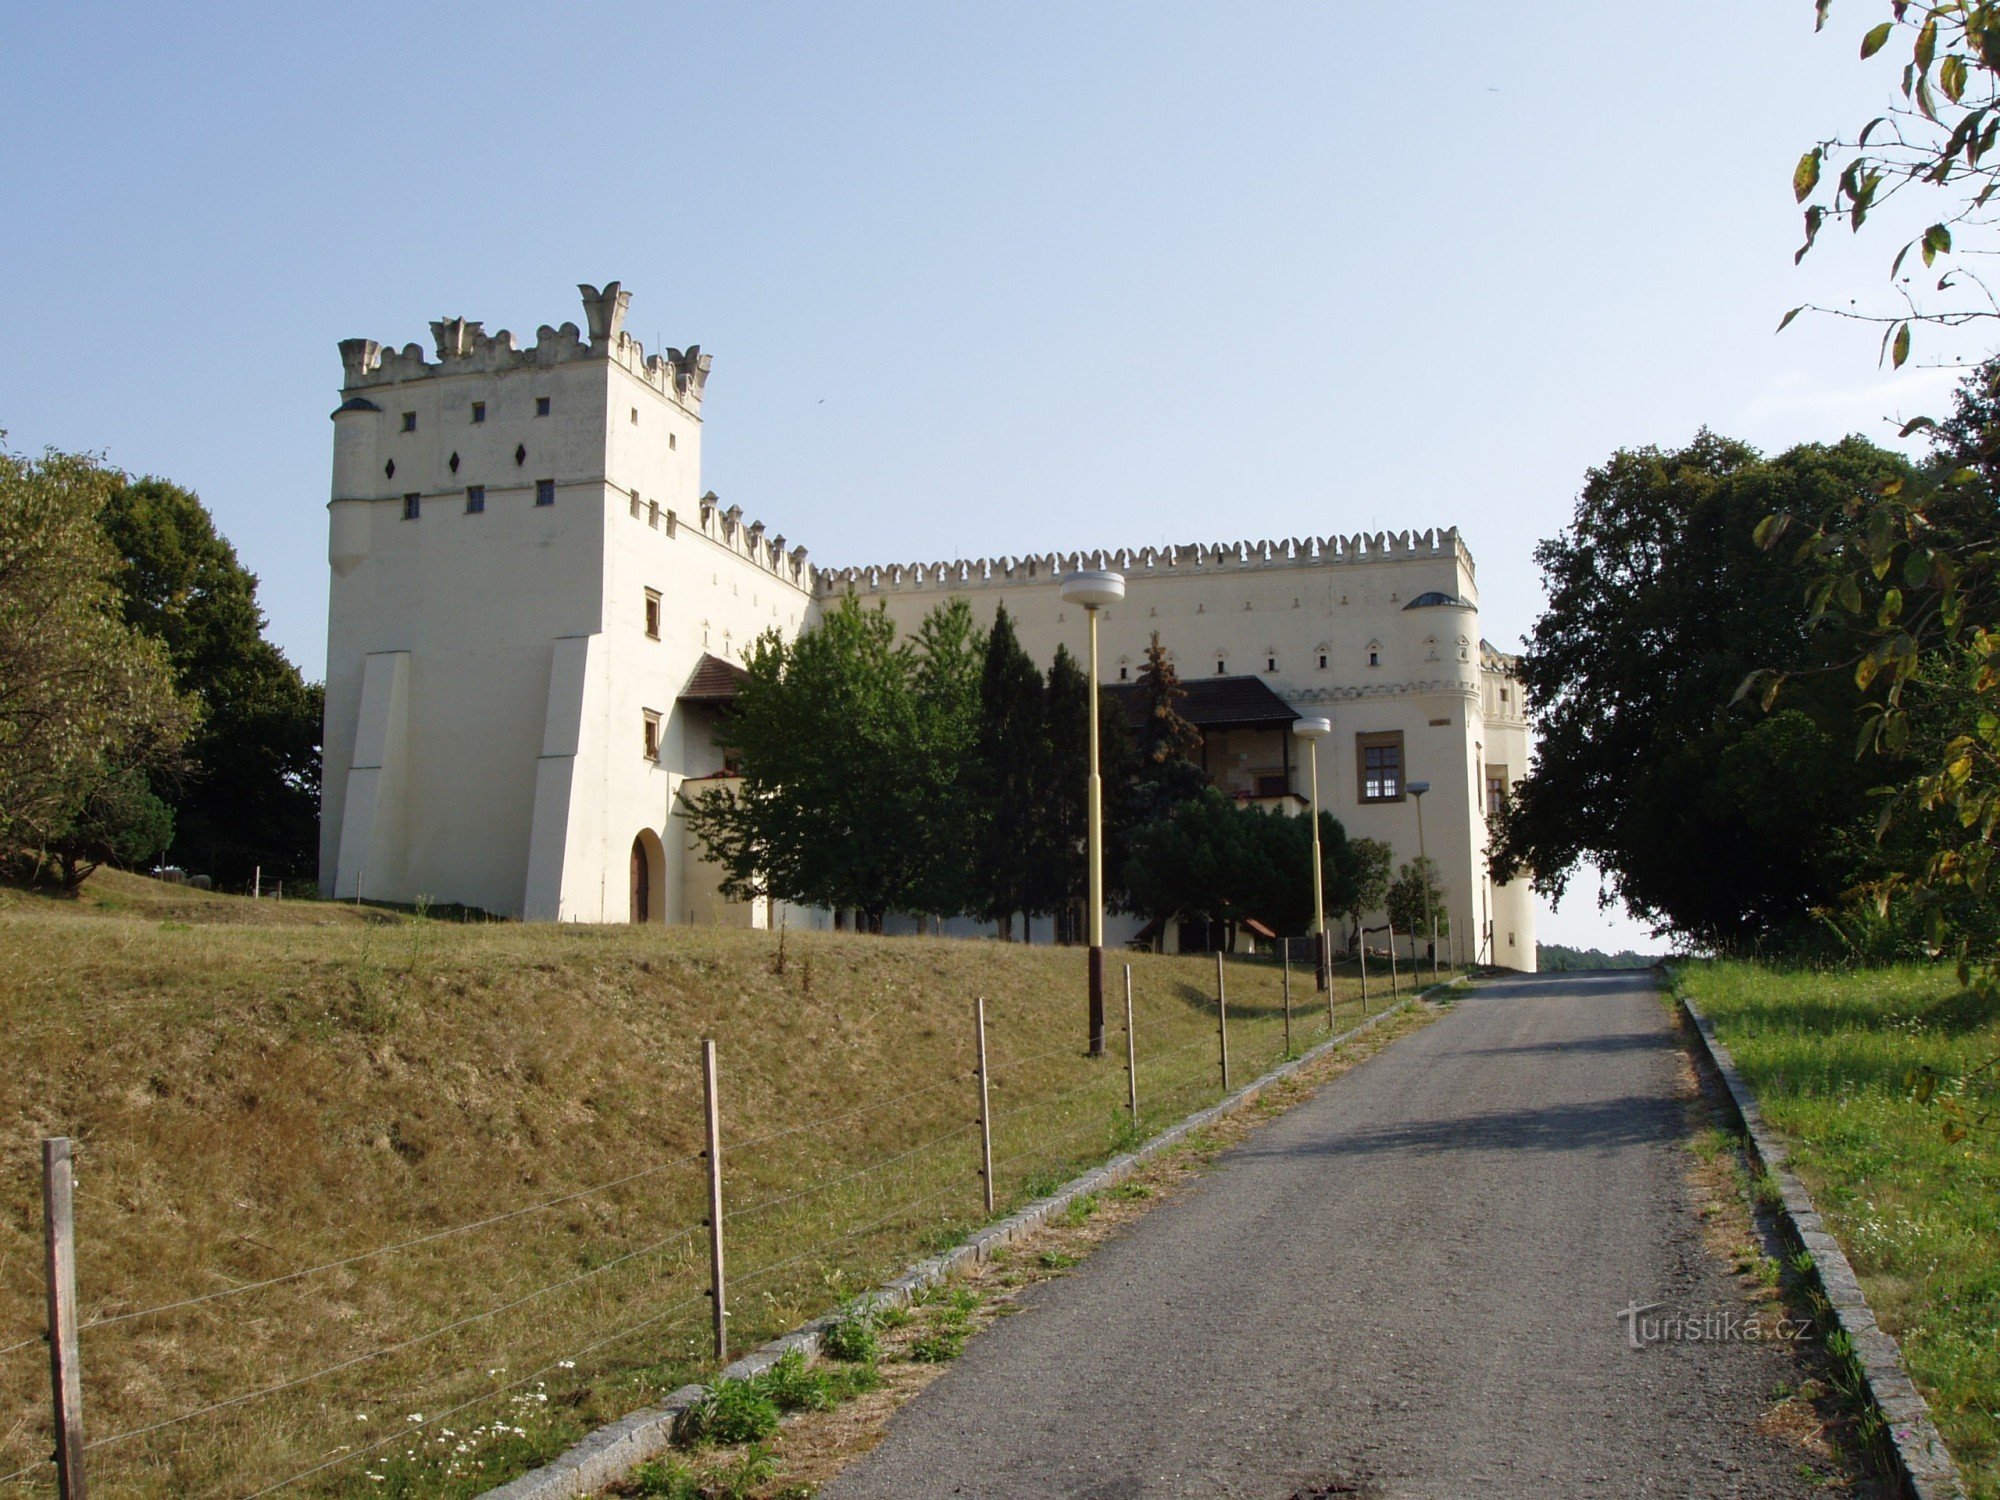 Новые замки возле Несовице